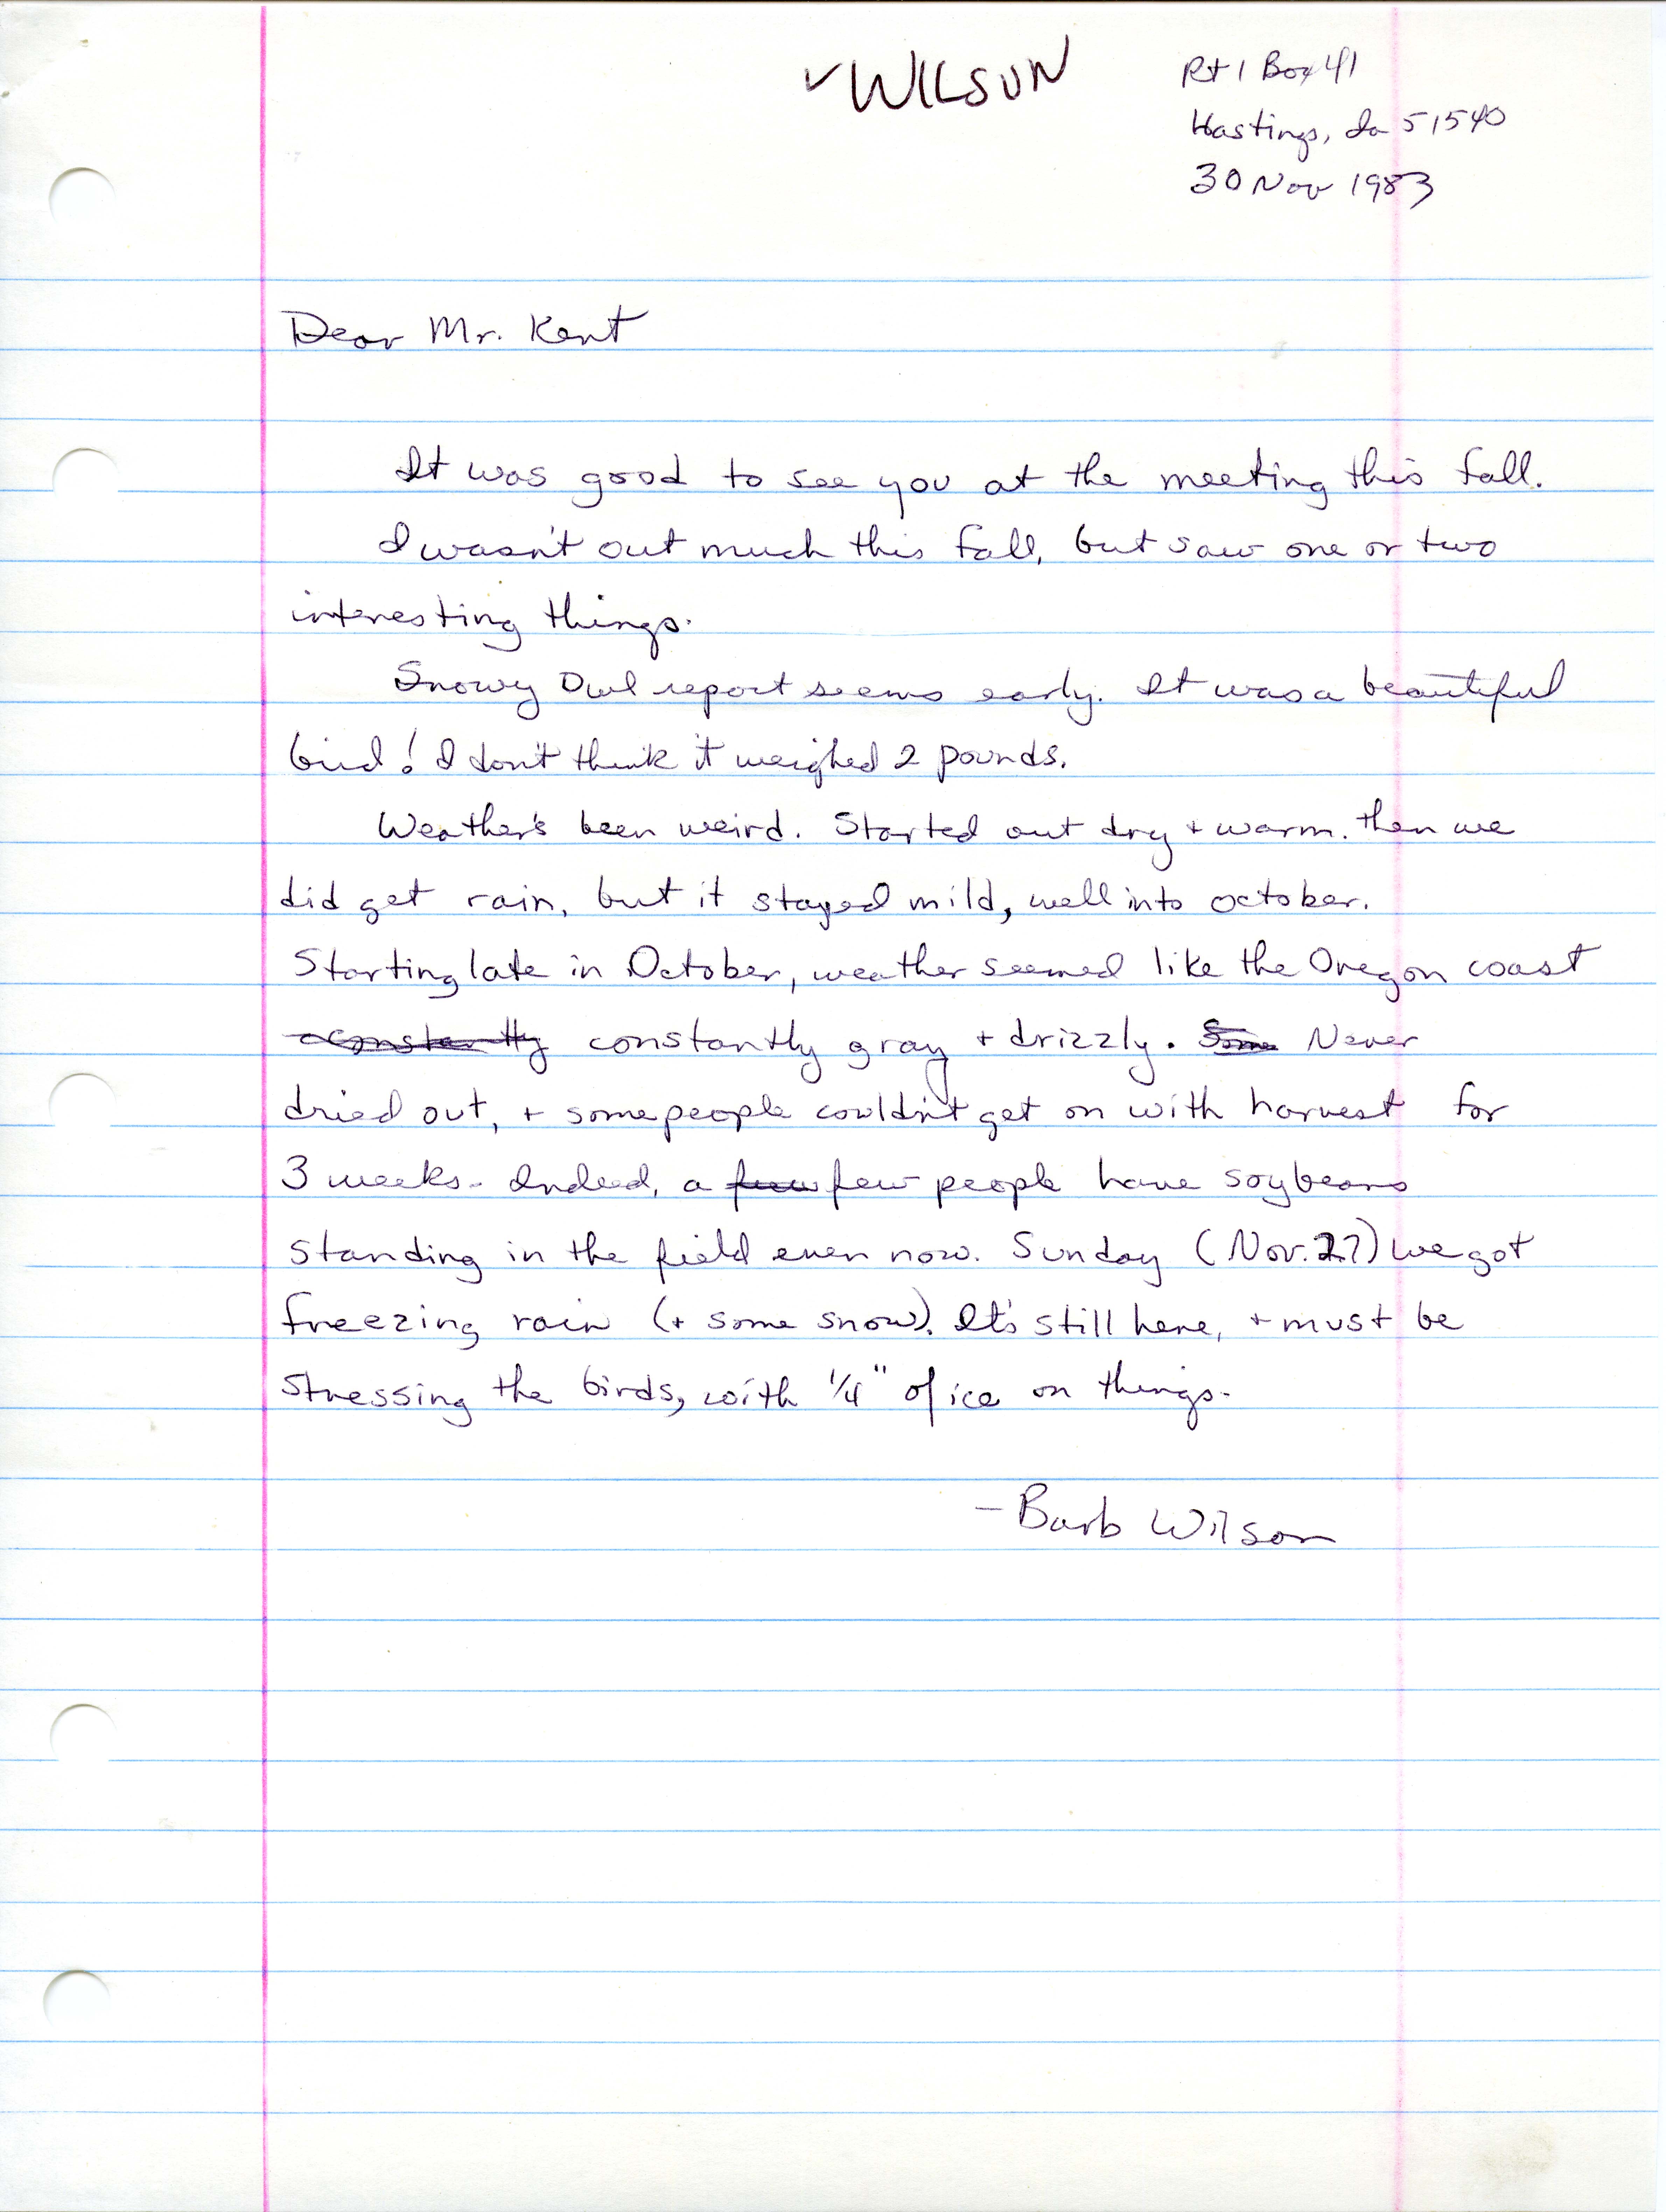 Barb Wilson letter to Thomas Kent regarding fall sightings, November 30, 1983